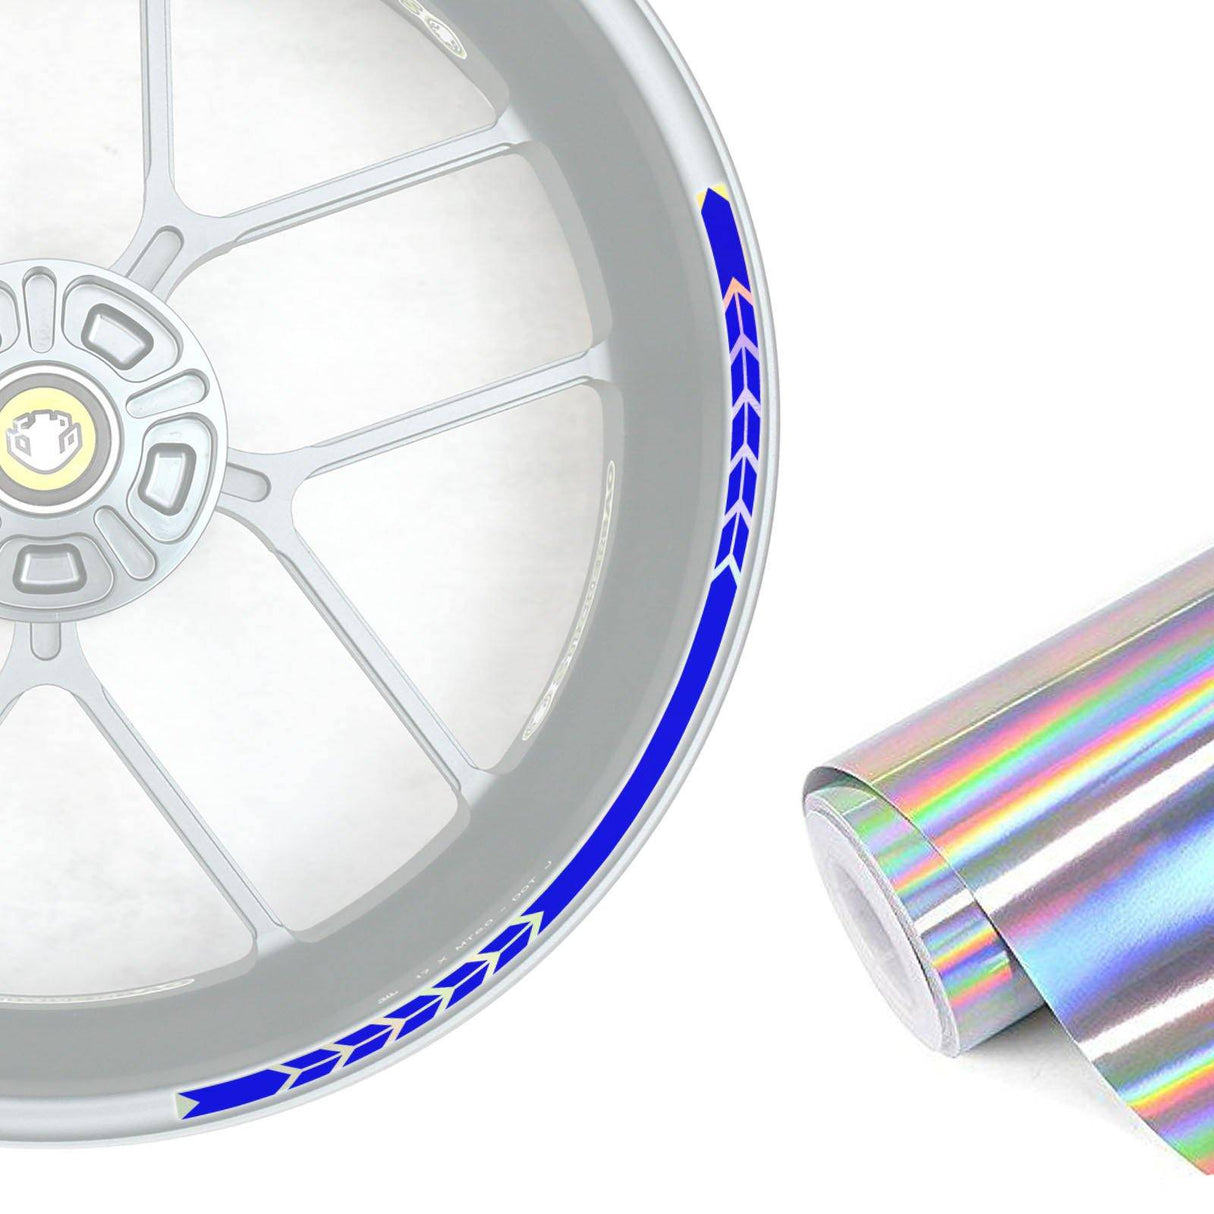 17 inch Rim Rainbow Holographic Wheel Stickers J10 Rim Skin Decal Strip | For Kawasaki Ninja 300 400 650 1000 ZX14R.